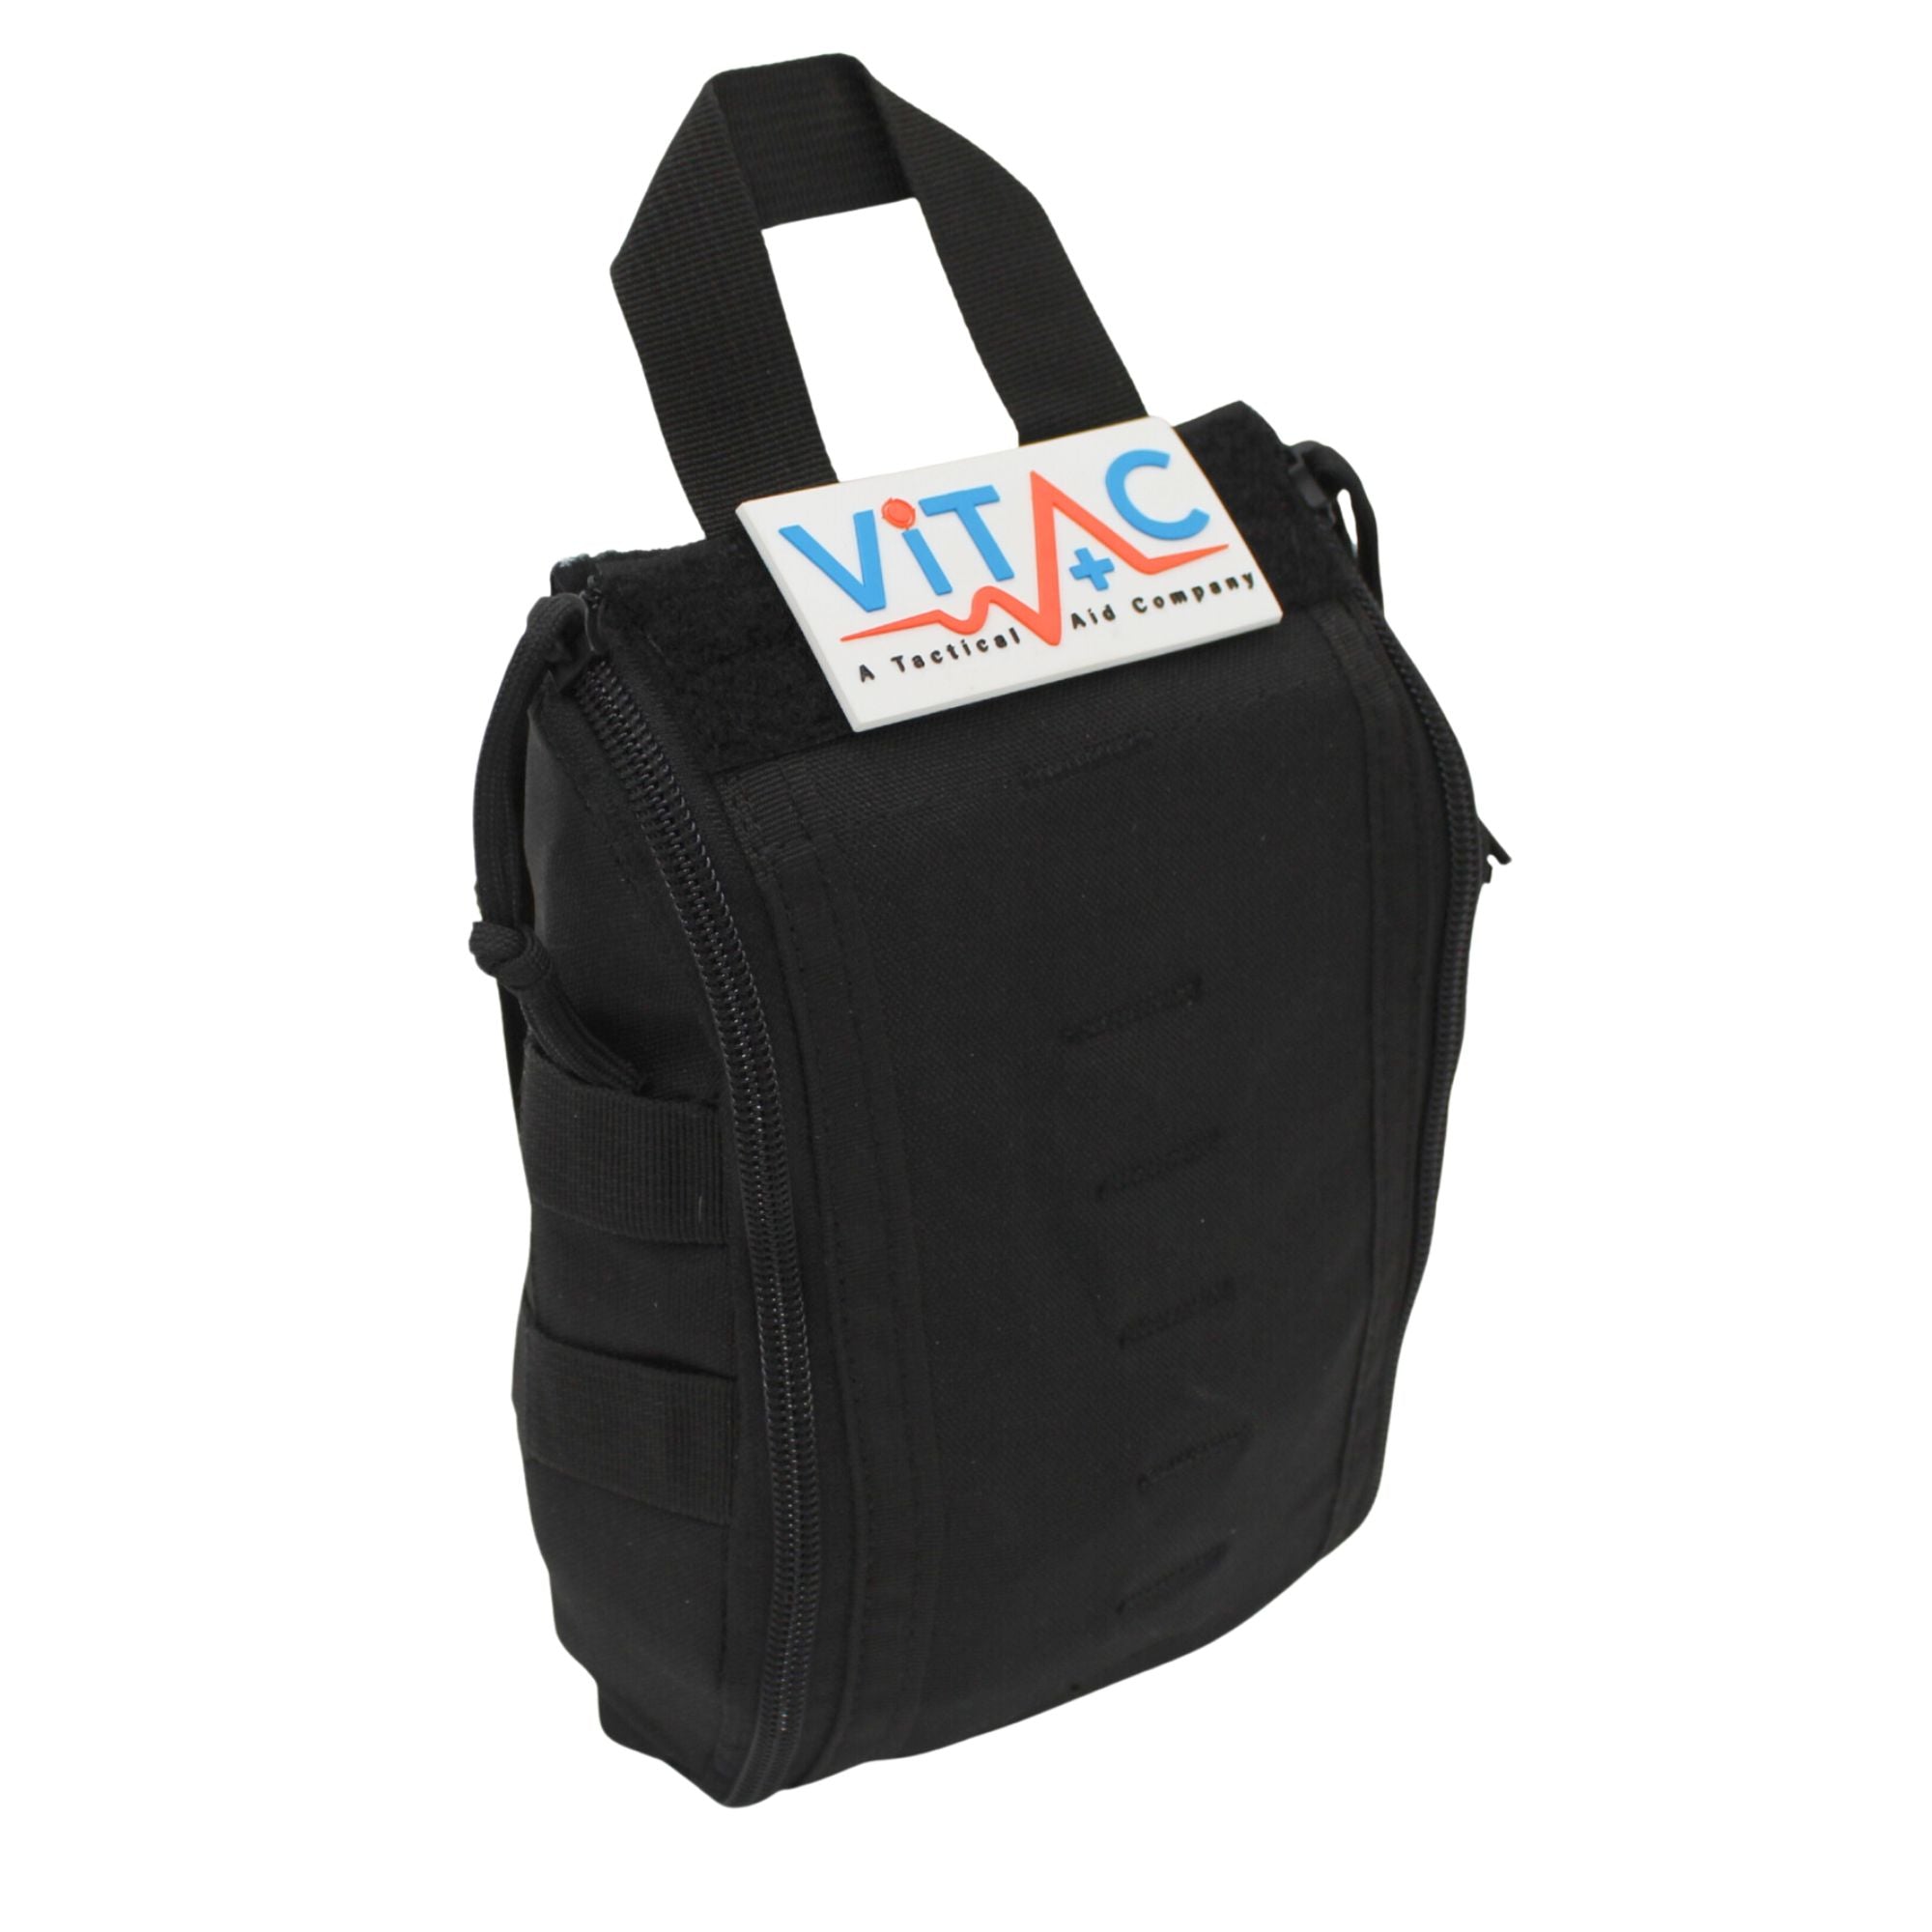 ViTAC Tactical IFAK Trauma Kit Individual First Aid Kit Black